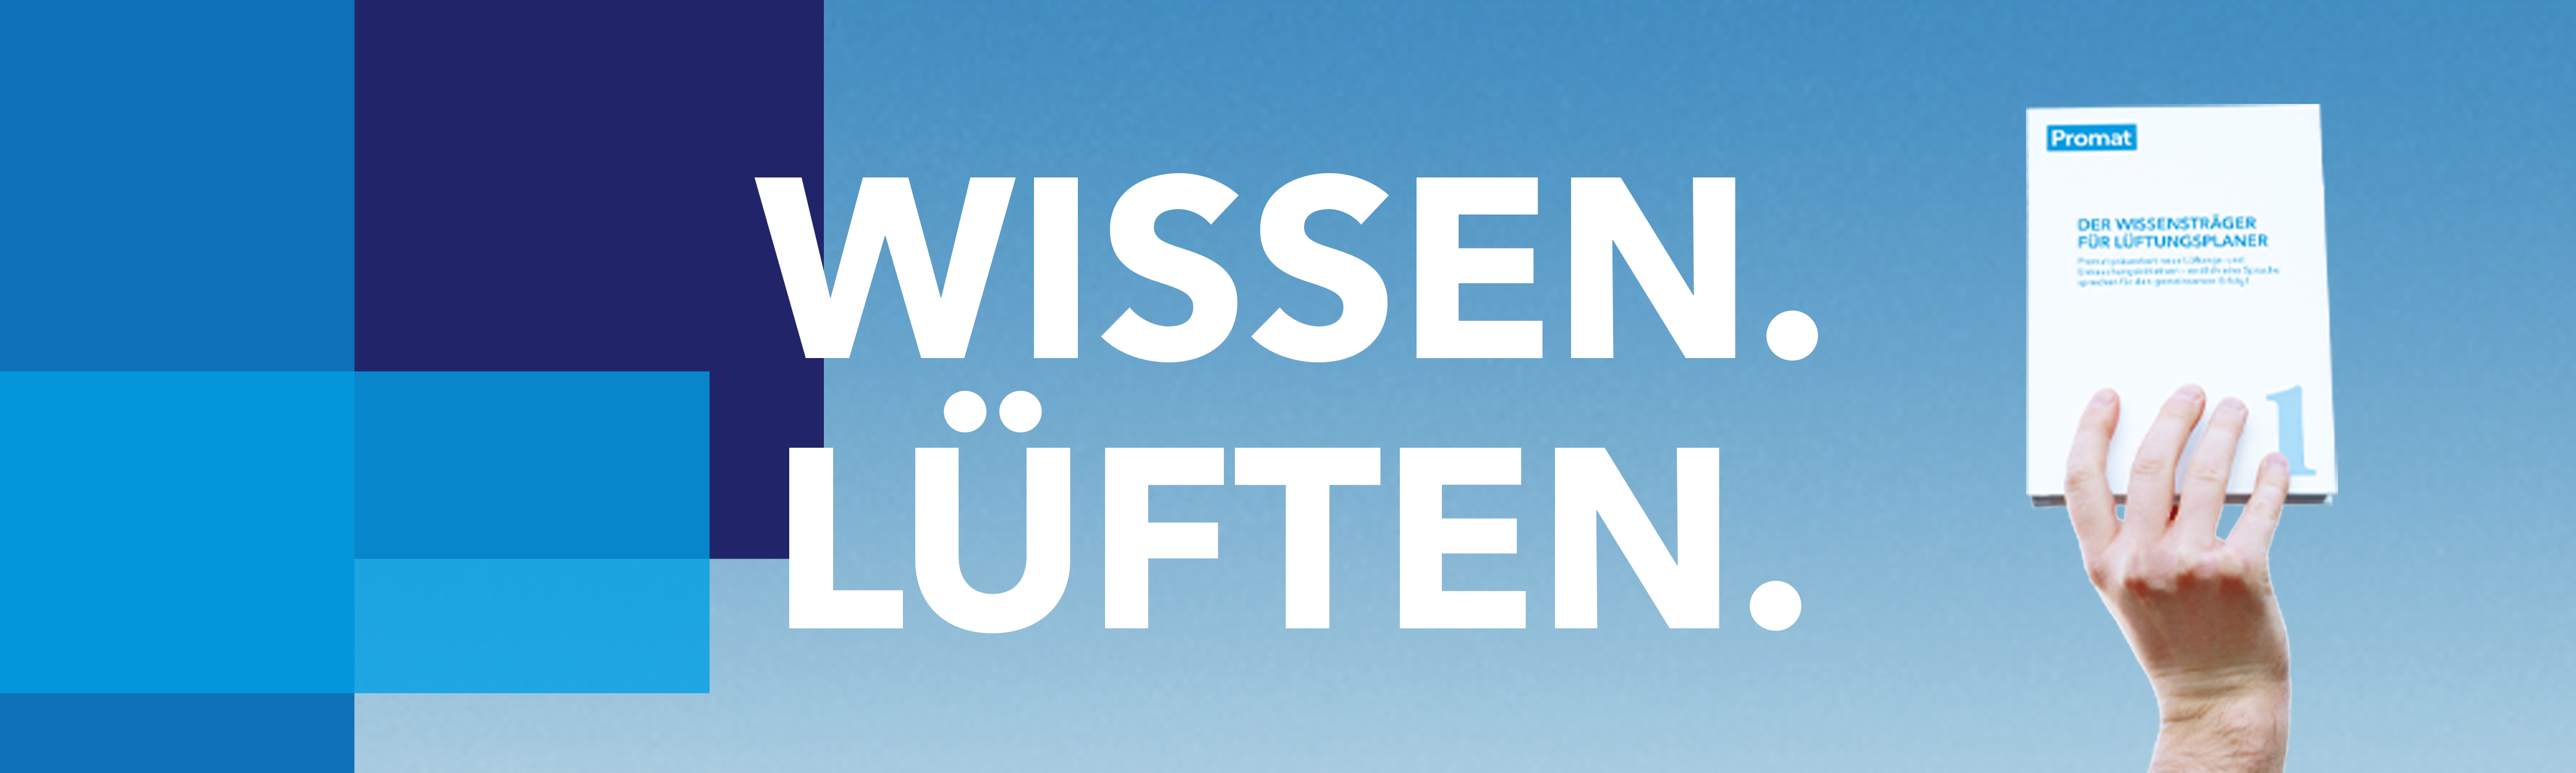 Wissen-Lueften-Promat-Banner-4168x1250.jpg